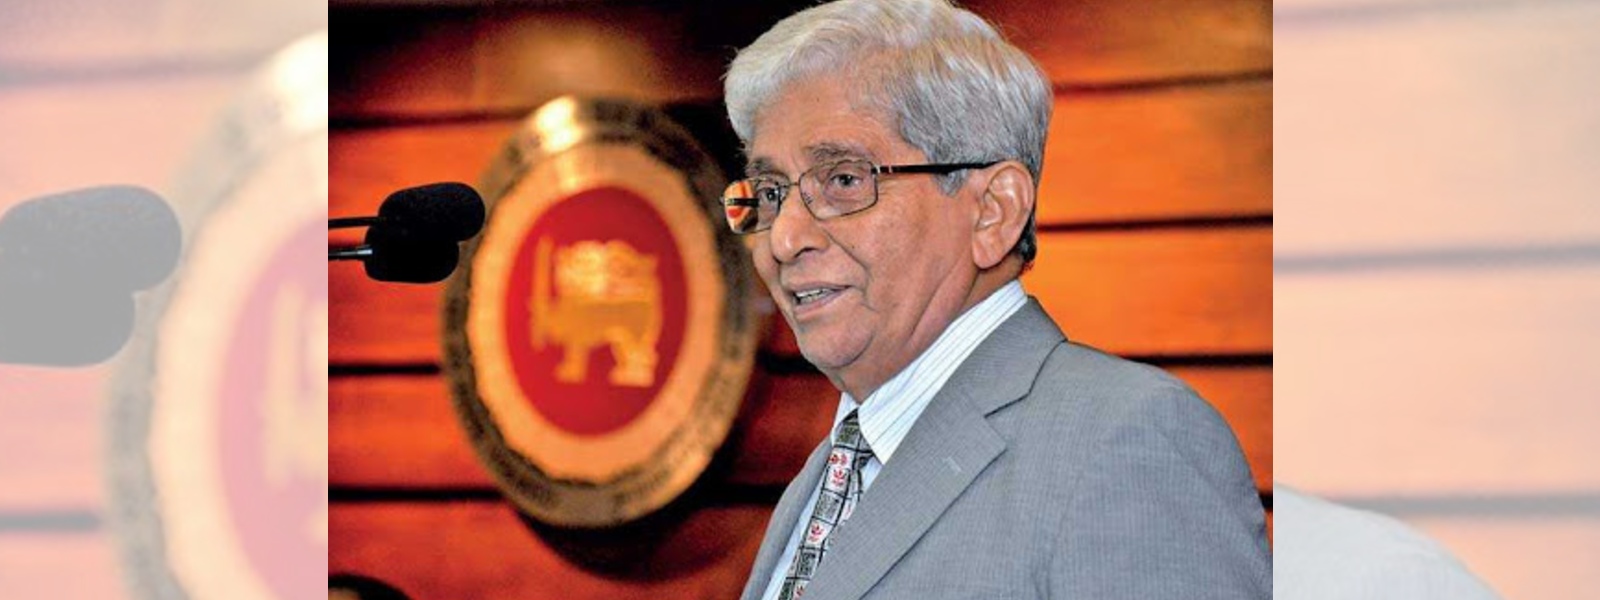 CBSL Governor Prof. W.D. Lakshaman refutes claims on his resignation